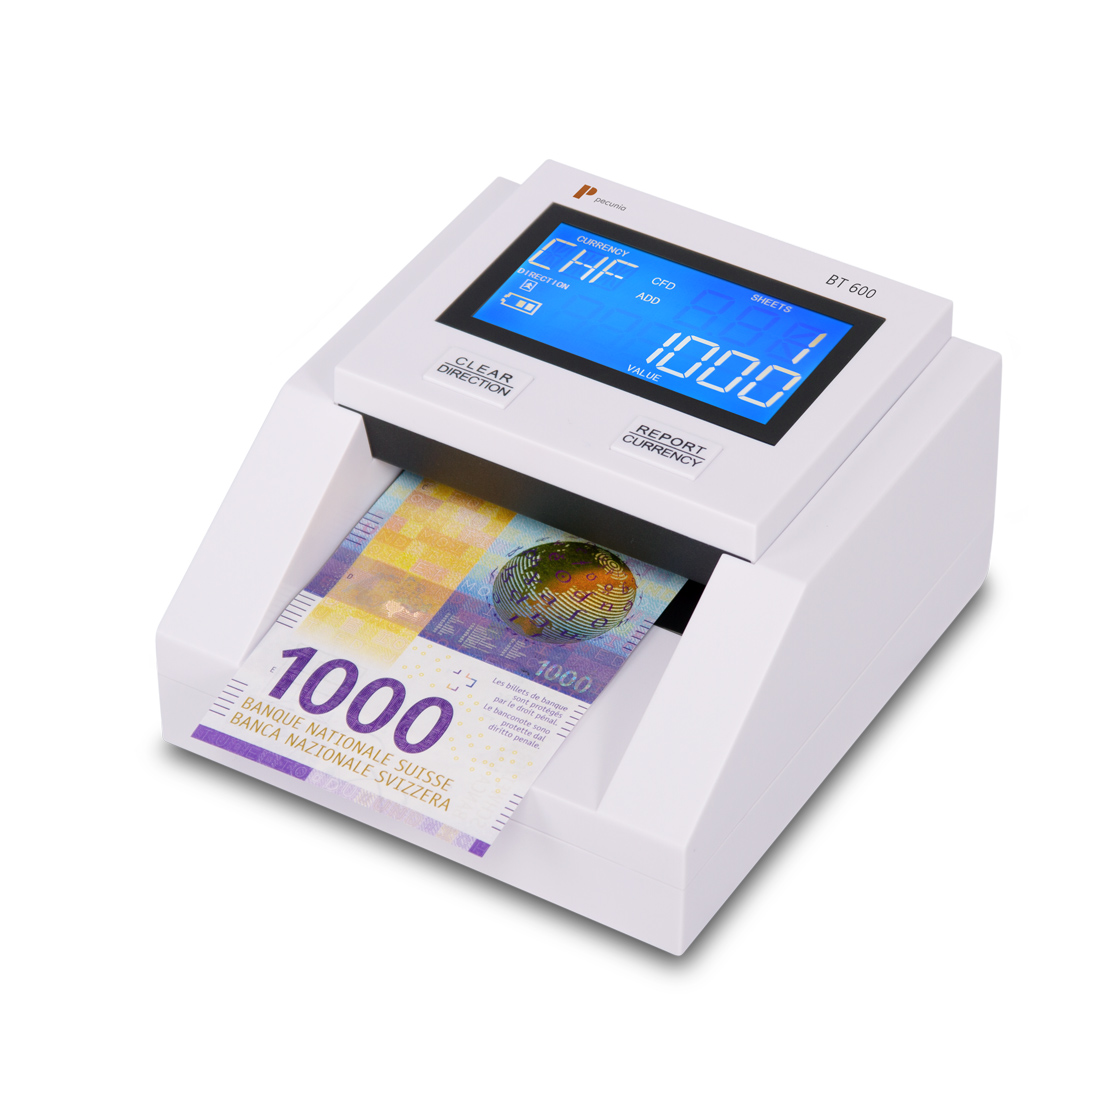 Counterfeit detector Pecunia BT 600 update